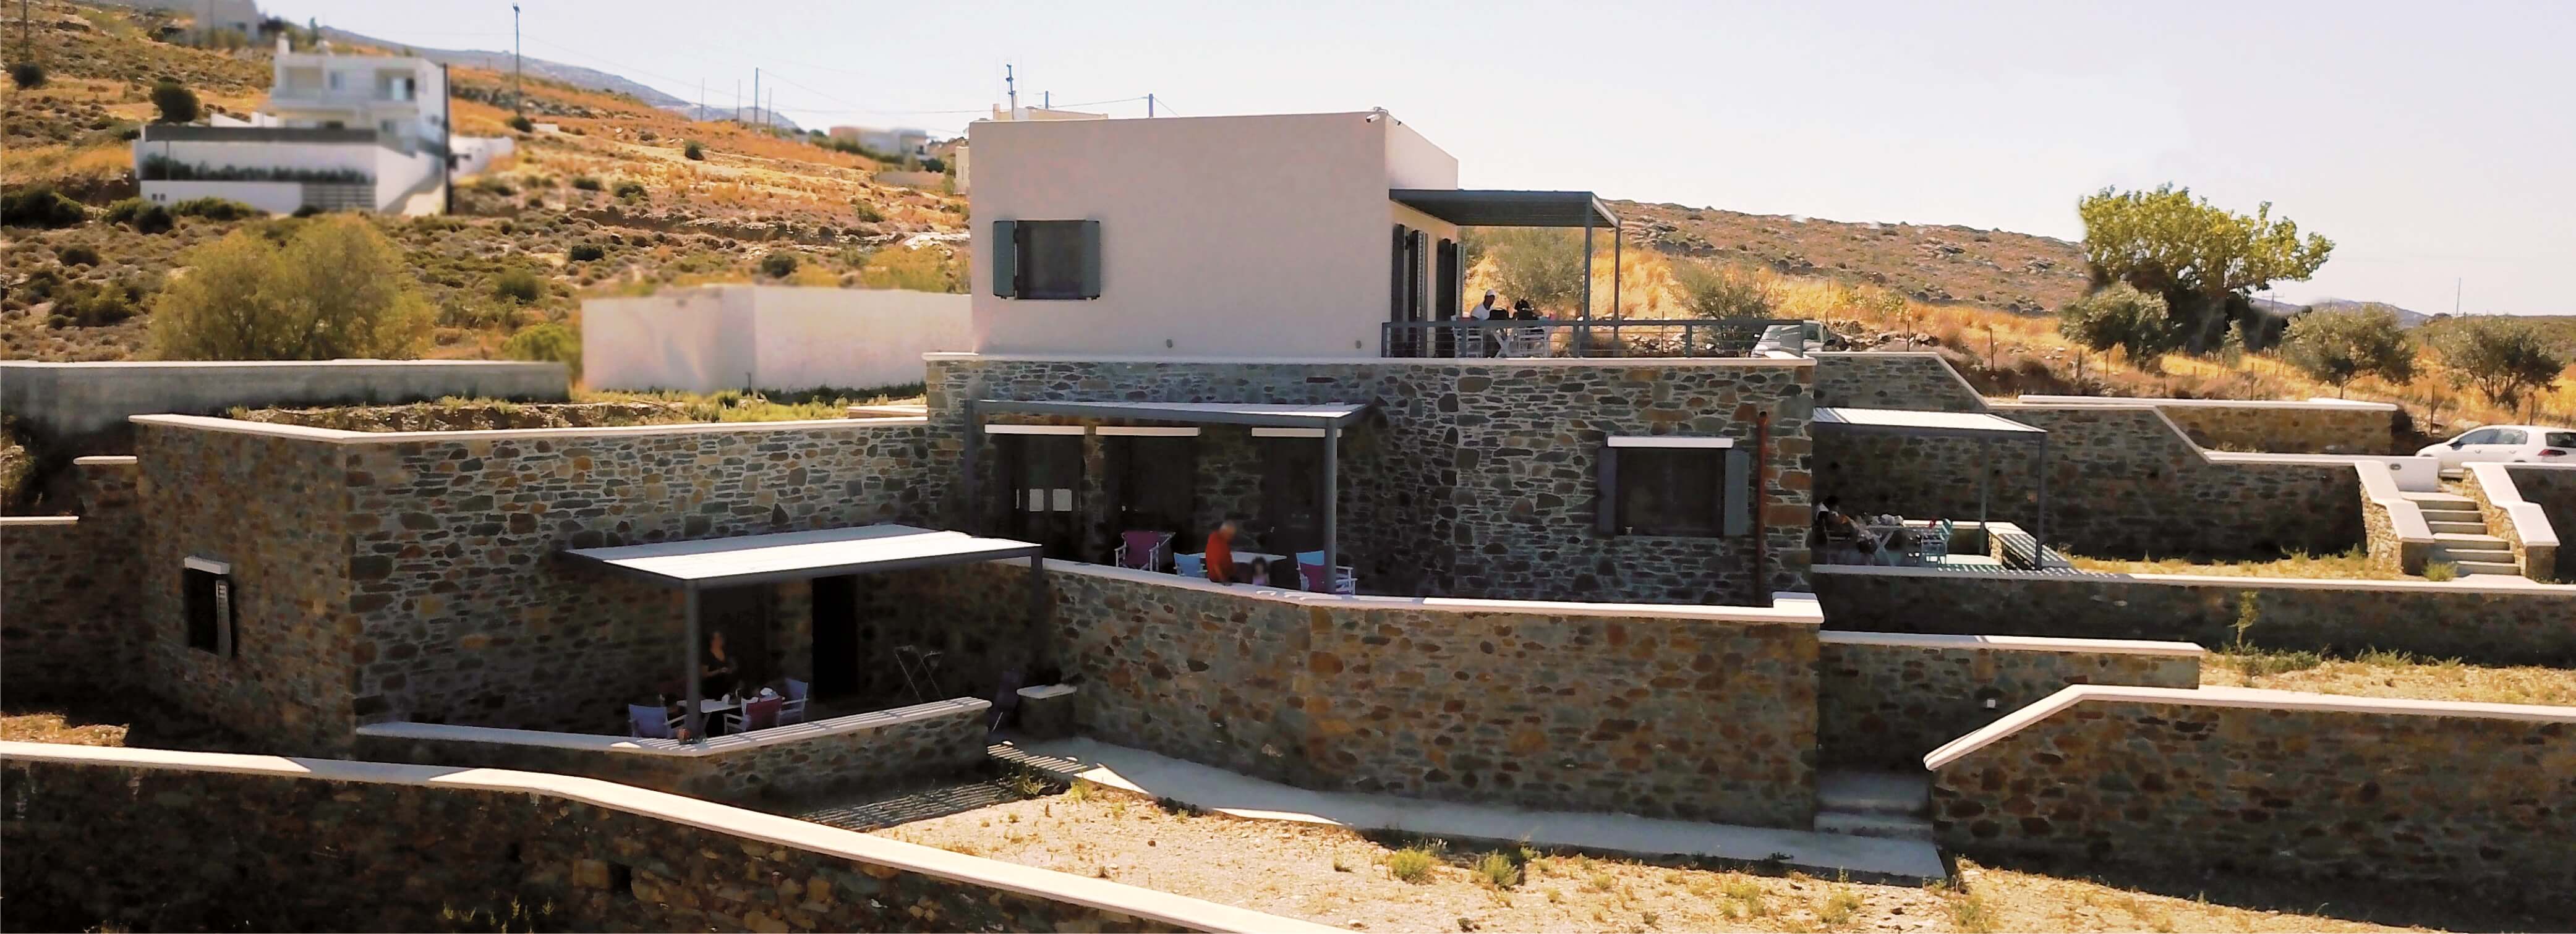 Karystos rent house Kavos Ενοικιαζόμενα παραθαλάσσια κατοικία σπίτι Κάρυστος Κάβος